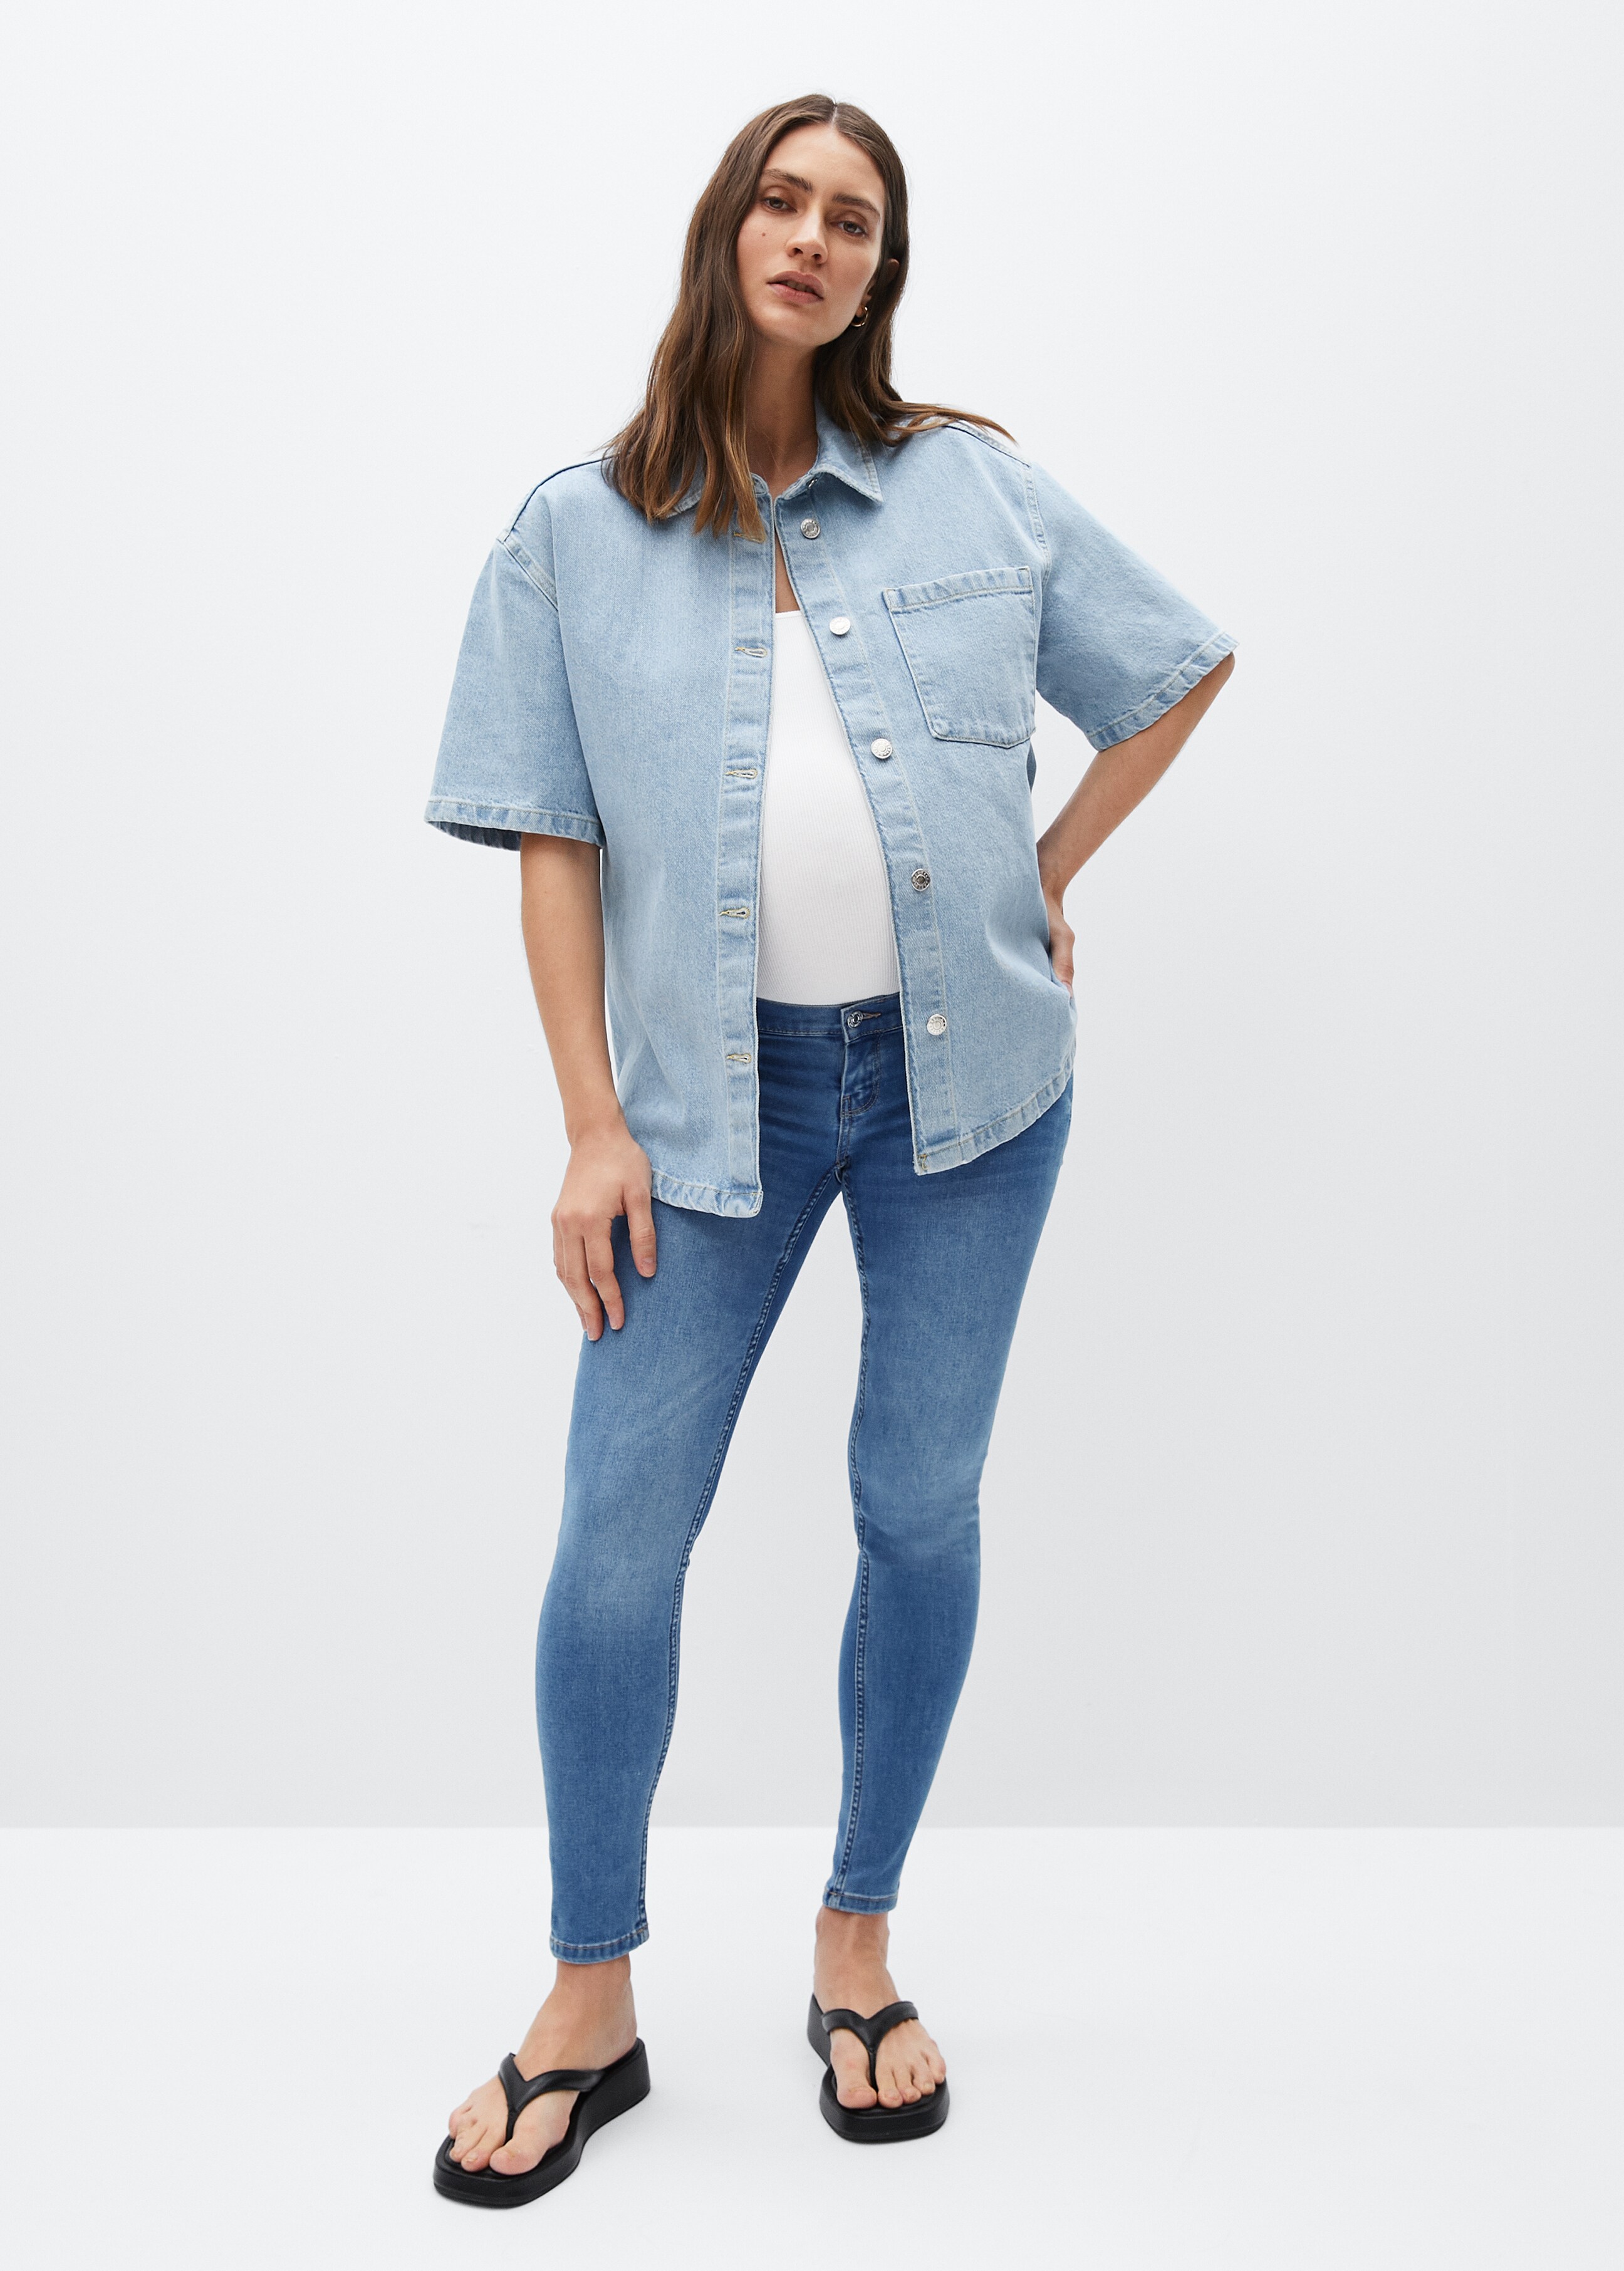 Skinny Maternity jeans - General plane